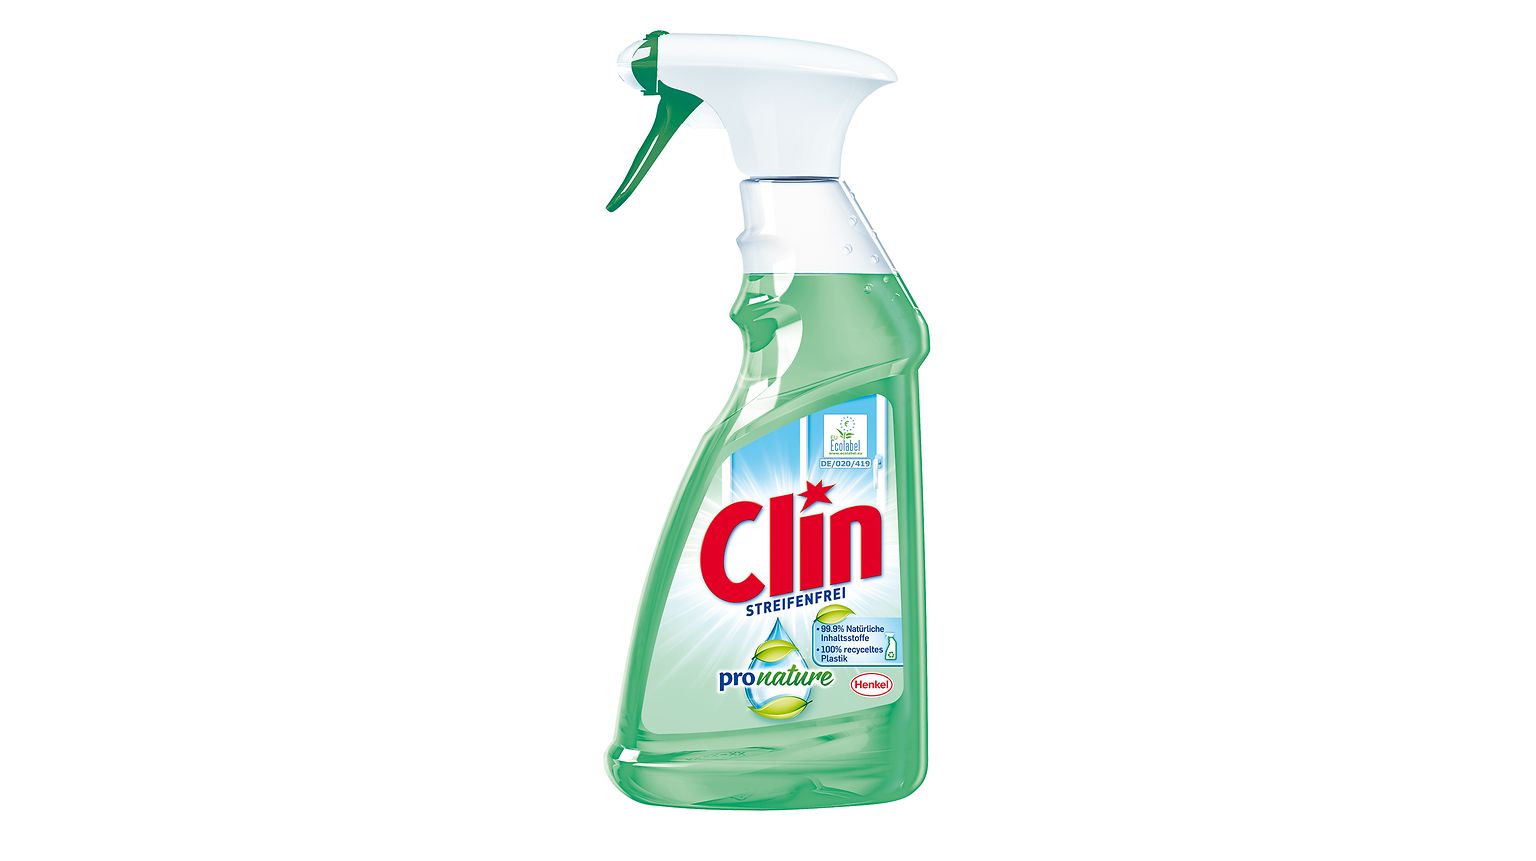 Clin Pro Nature